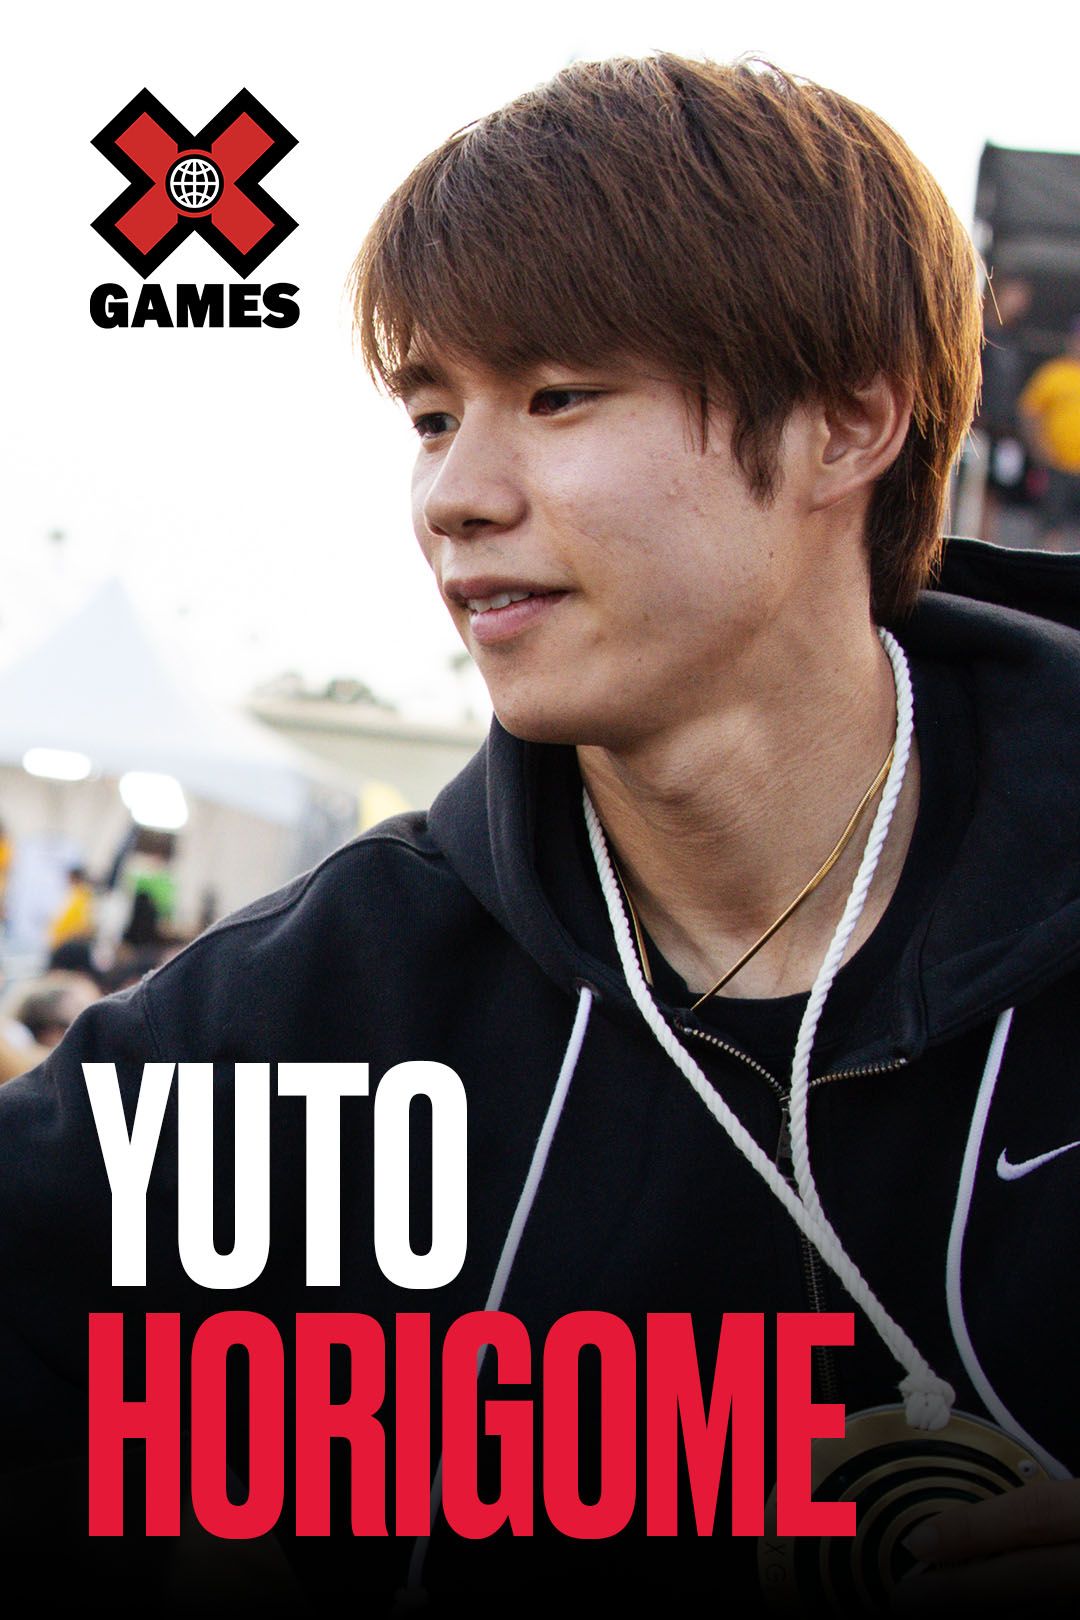 Yuto Horigome